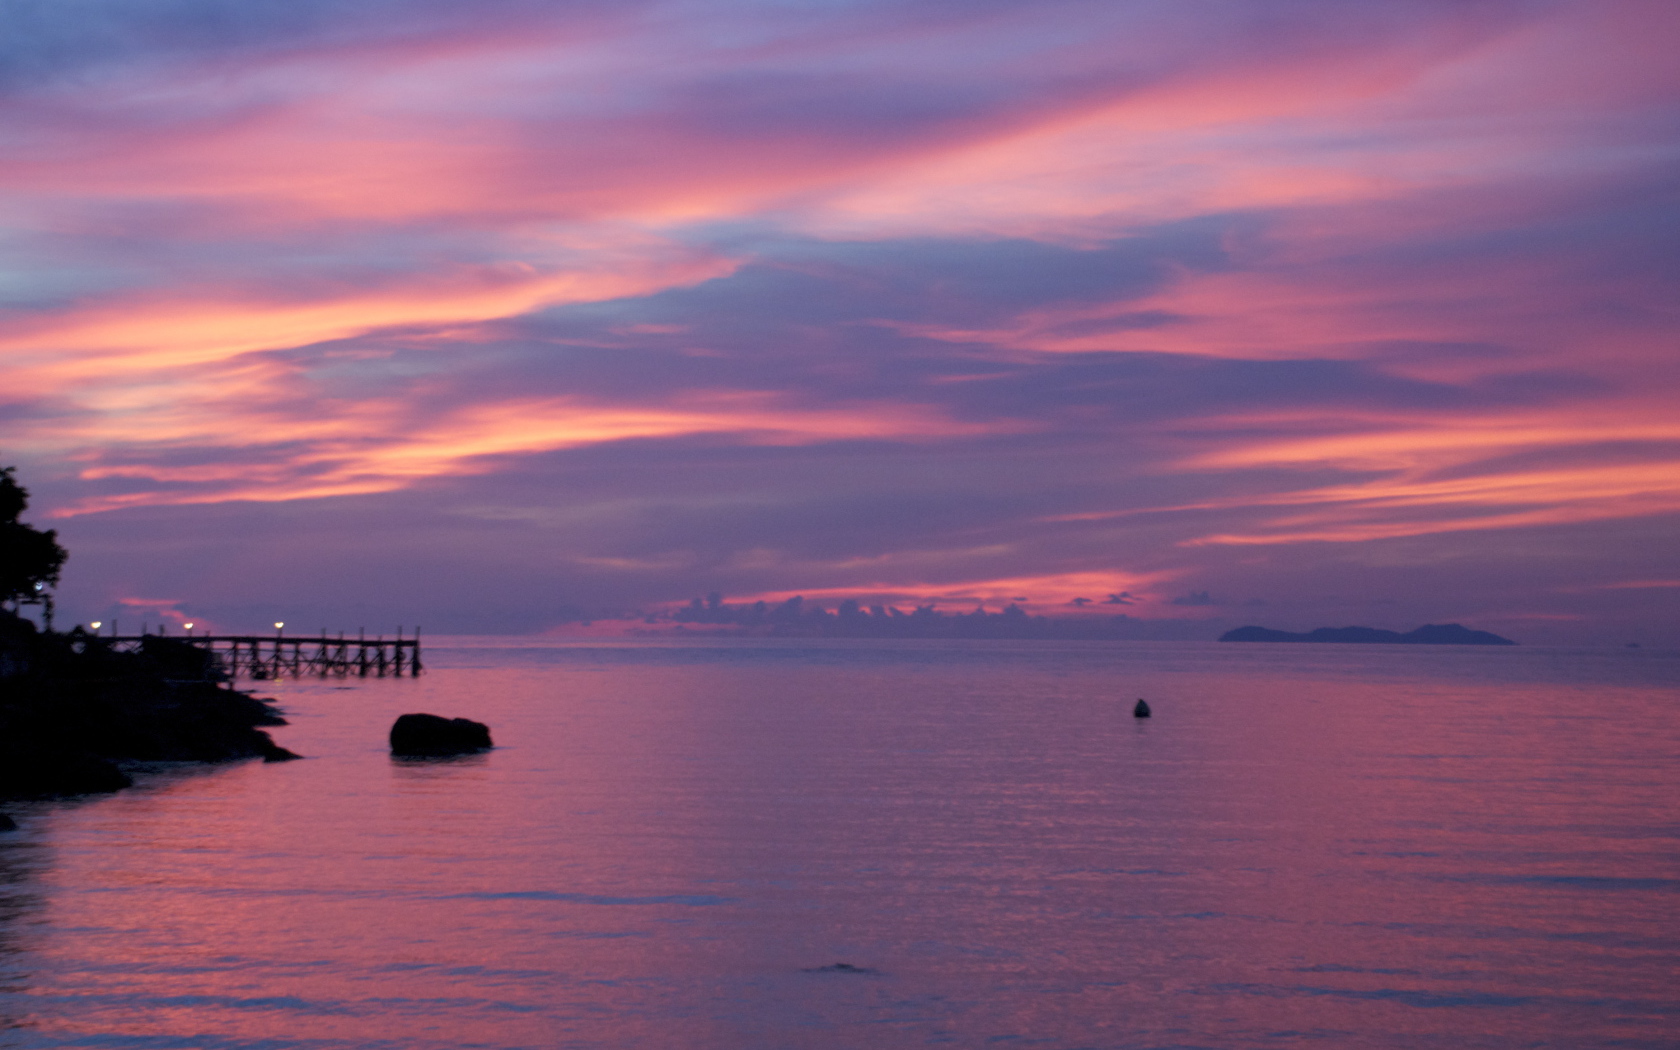 Pink sunset on the island of Koh Kood, Thailand